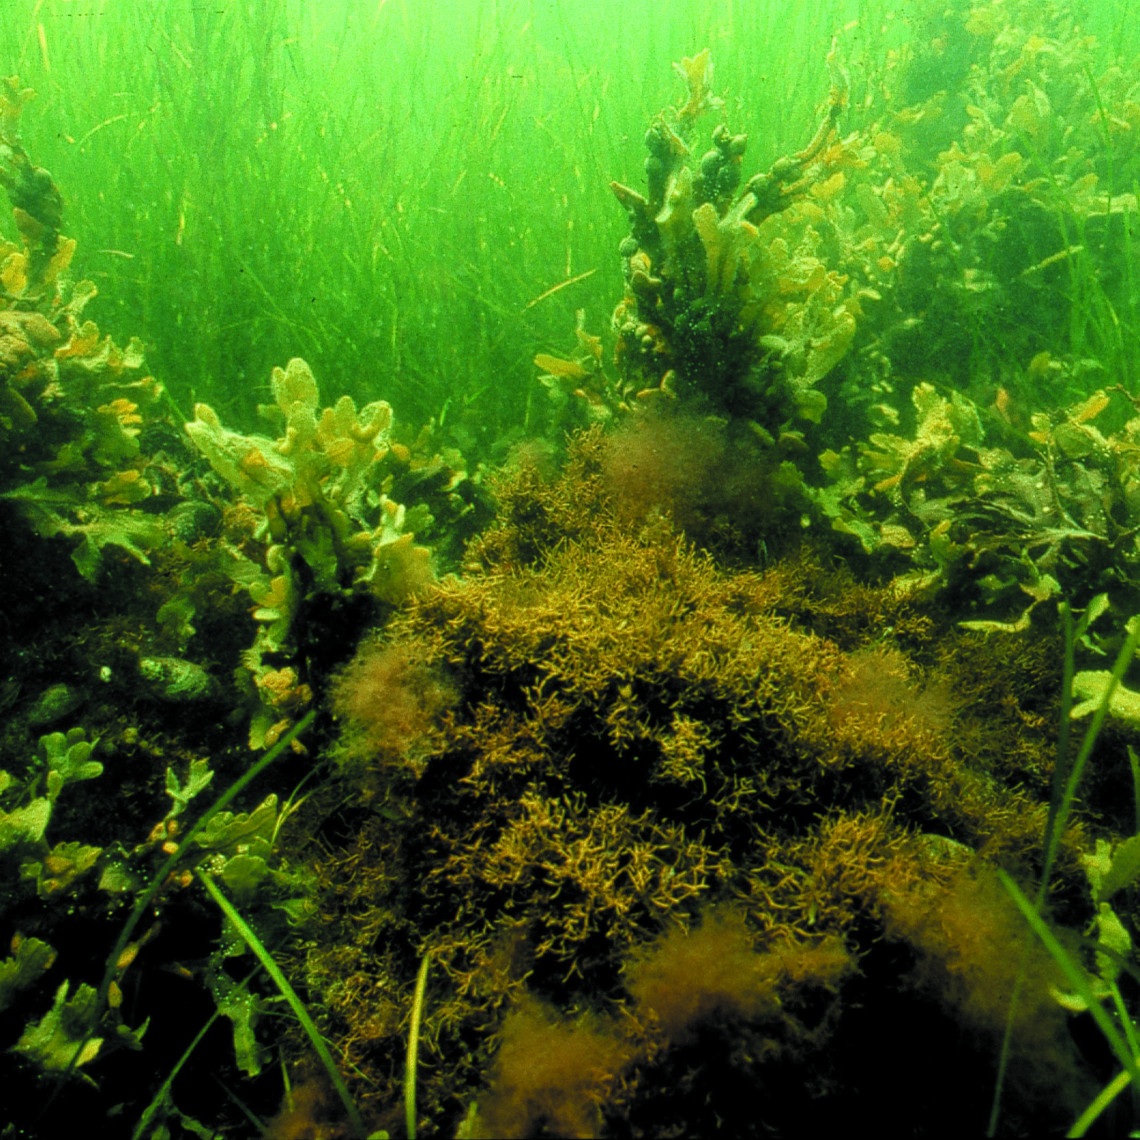 Brown algae, red algae and sea grass in the Baltic Sea